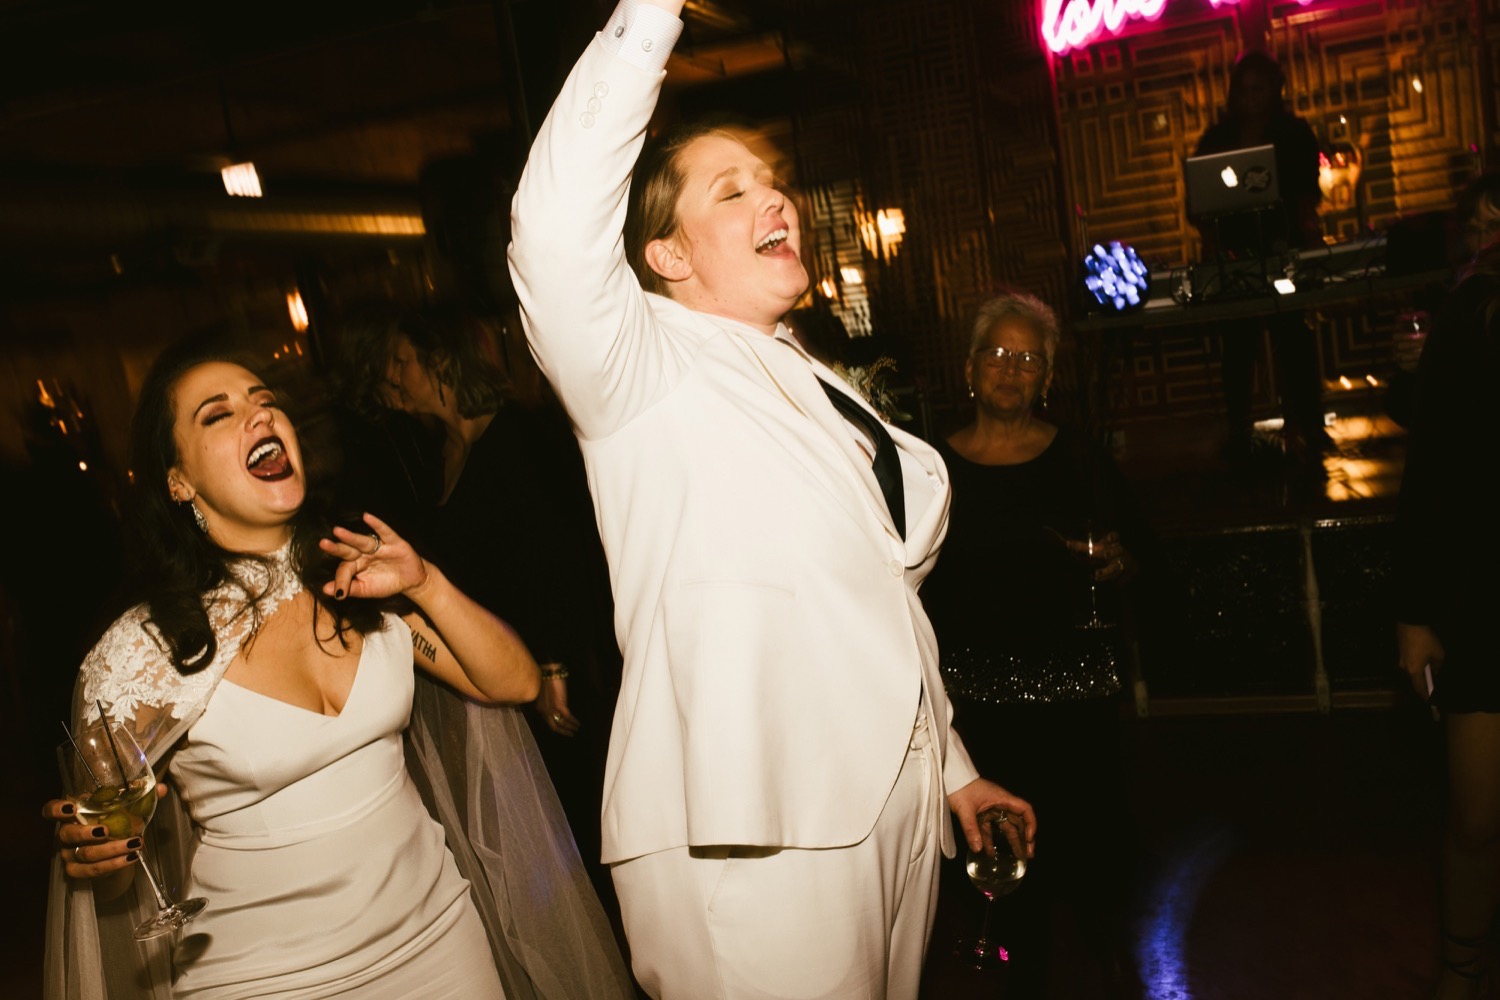 Chicago wedding couple dancing at LGBTQ wedding.